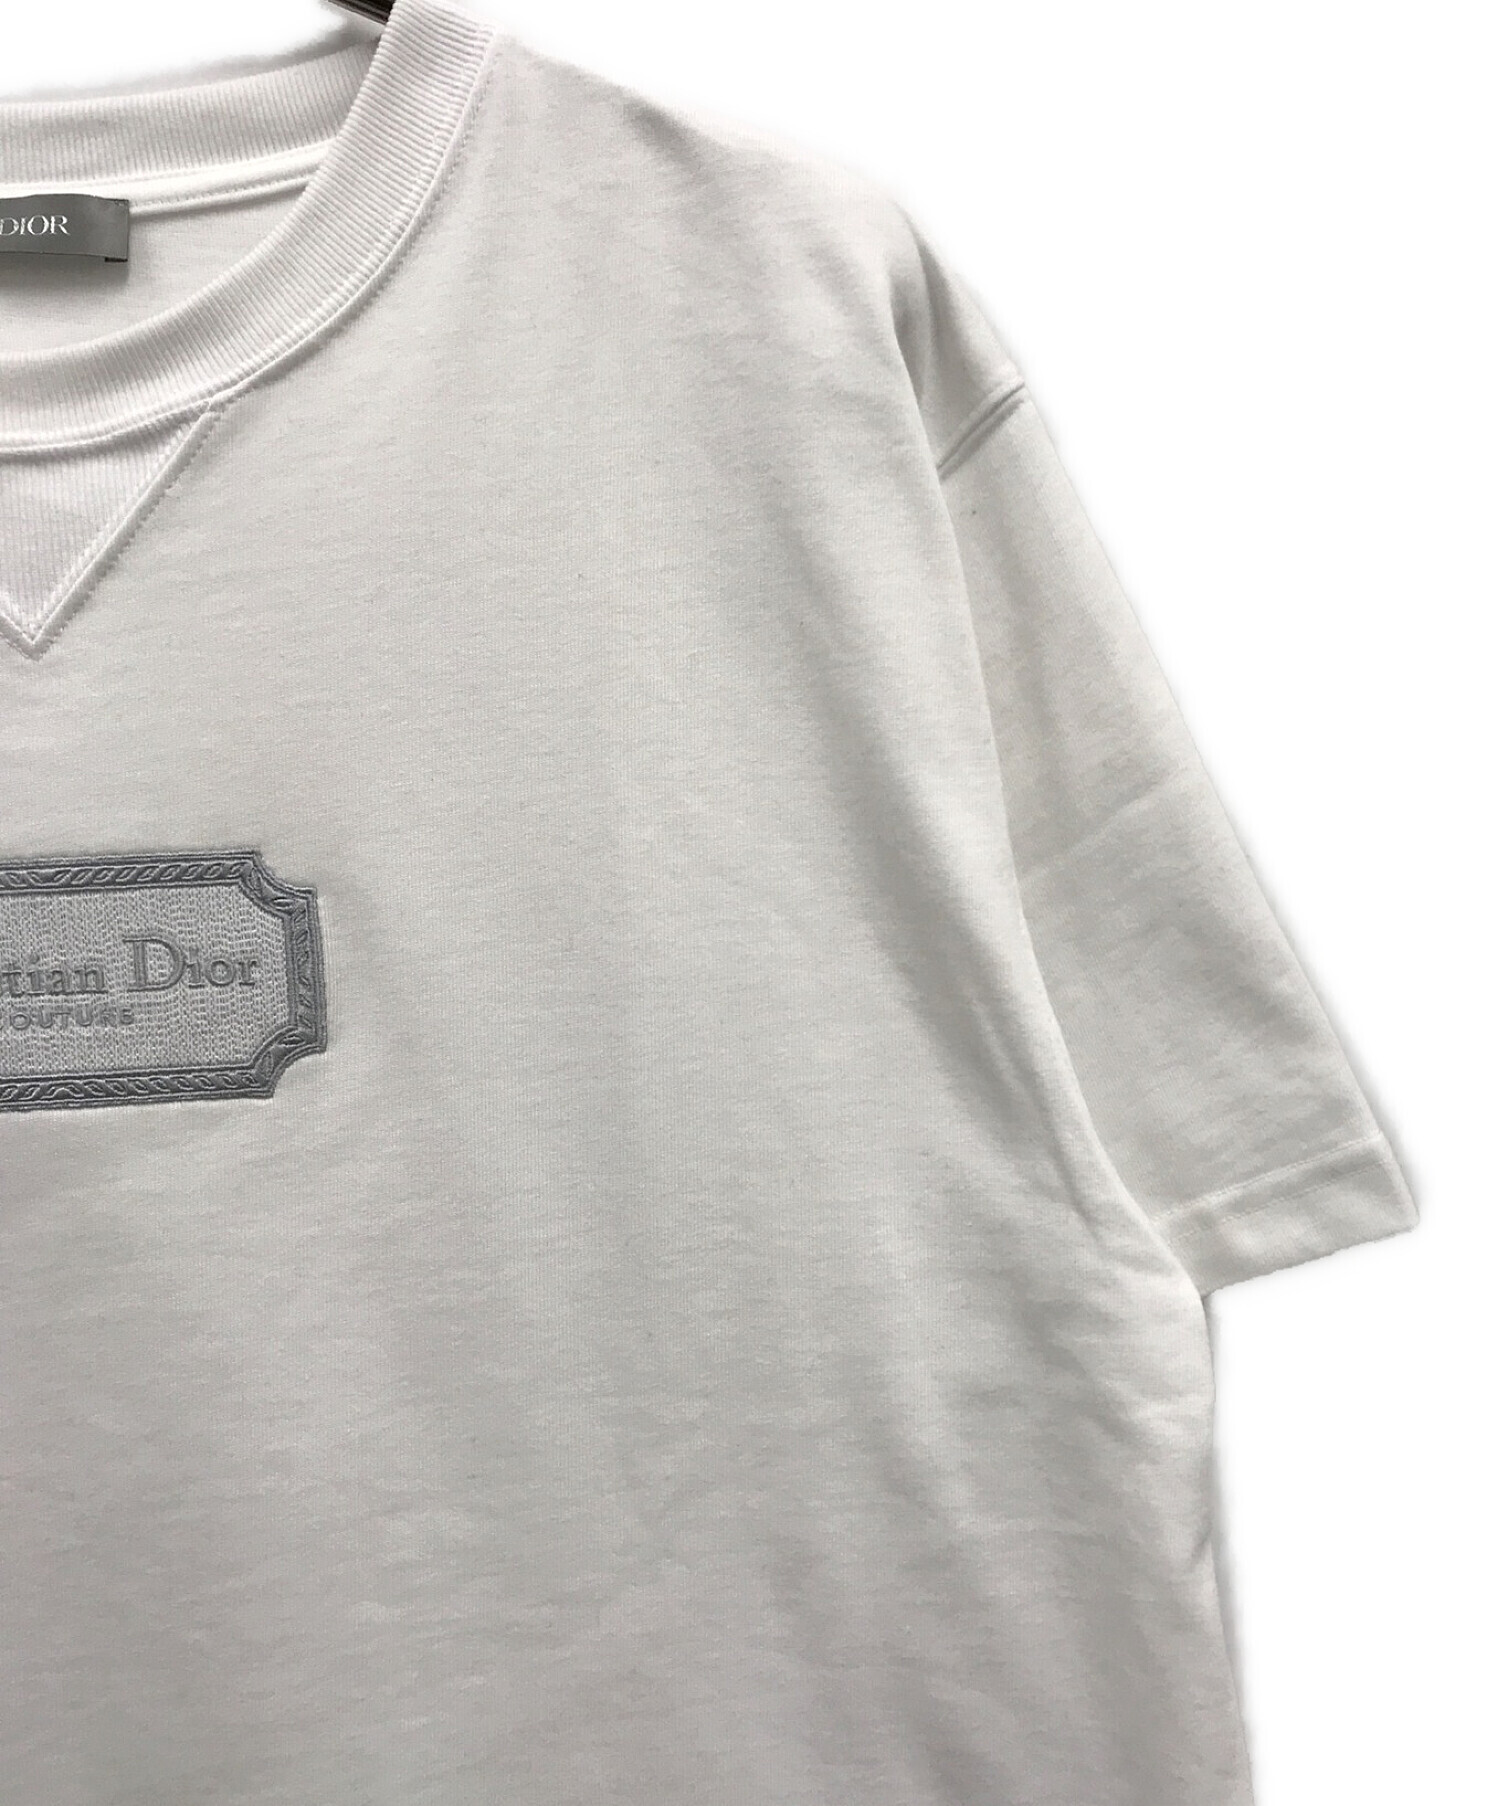 Christian Dior (クリスチャン ディオール) シグネチャーロゴ刺繍 半袖Tシャツ ホワイト サイズ:XXL